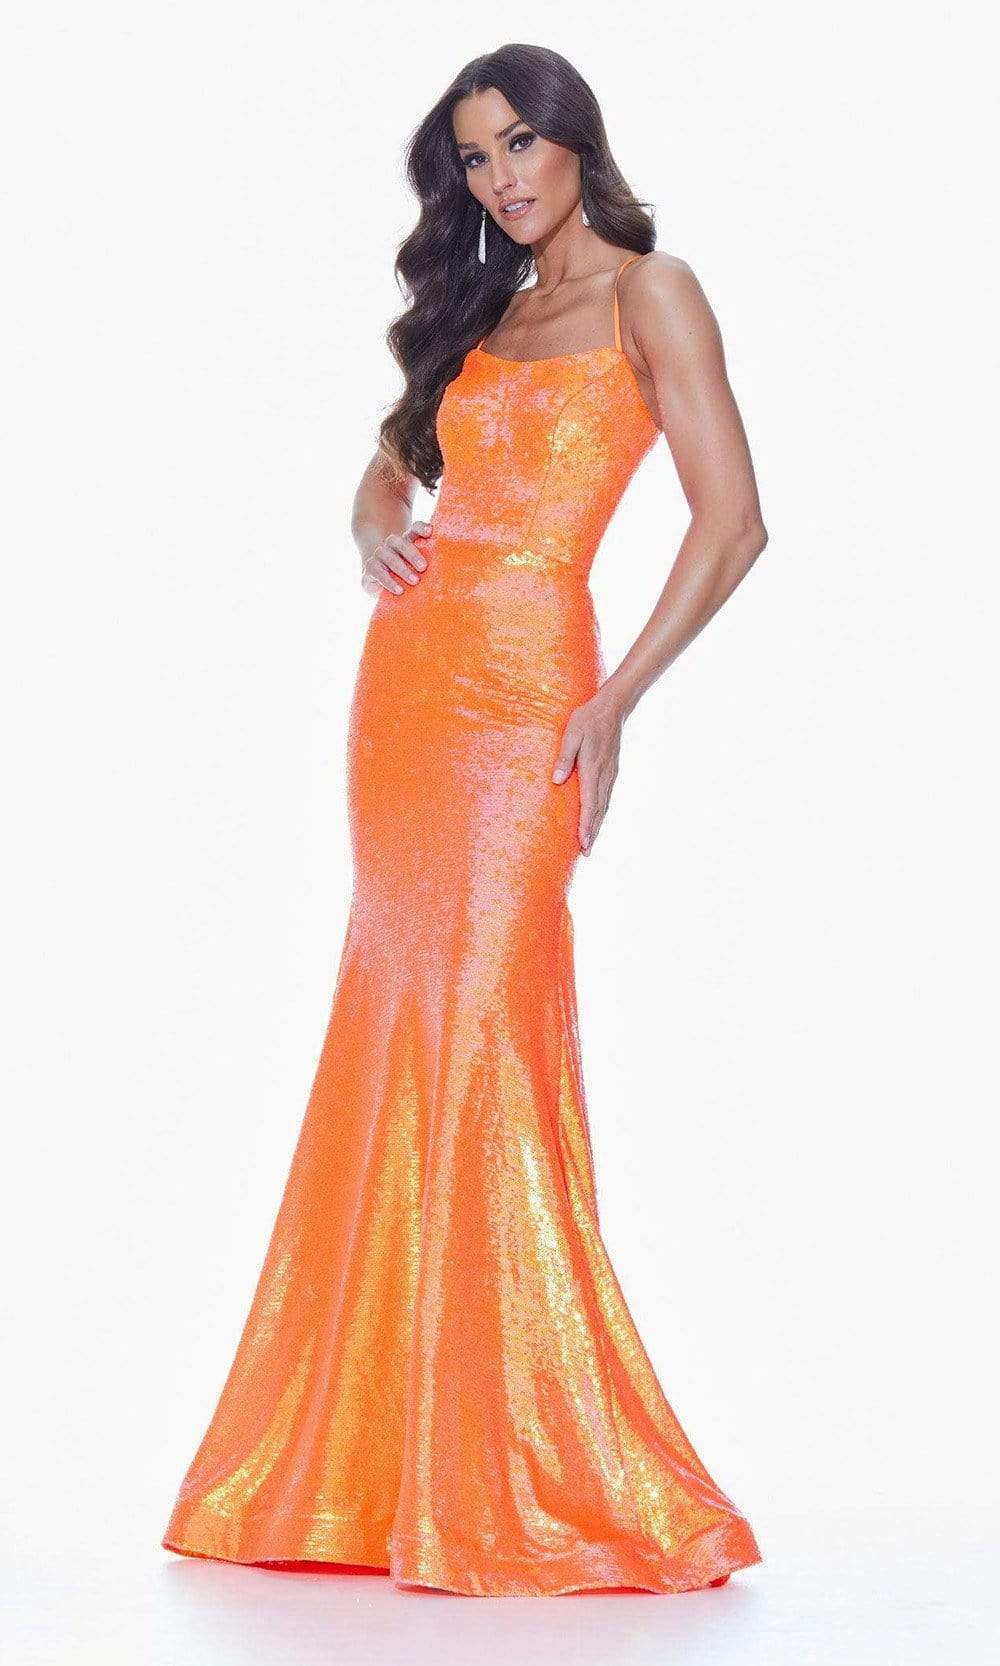 Ashley Lauren - 11024 Lace-up Back Iridescent Sequin Mermaid Gown Evening Dresses 0 / Neon Orange